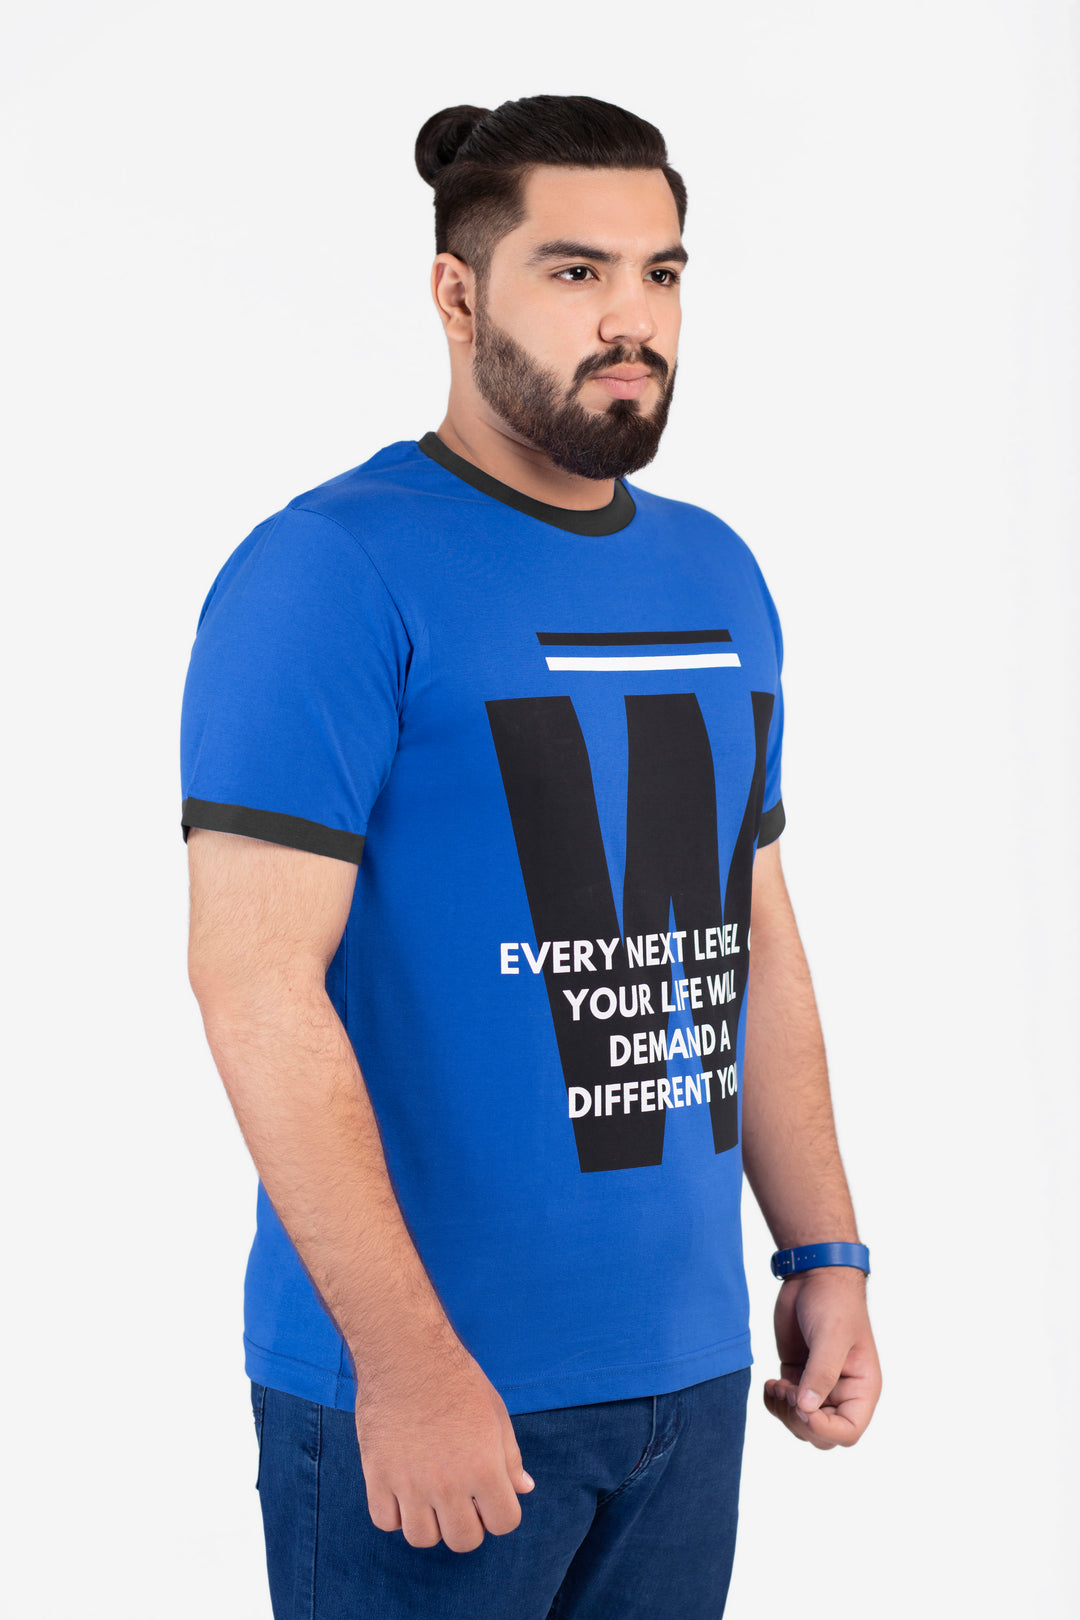 Plus Size Motivational T-Shirts in Pakistan